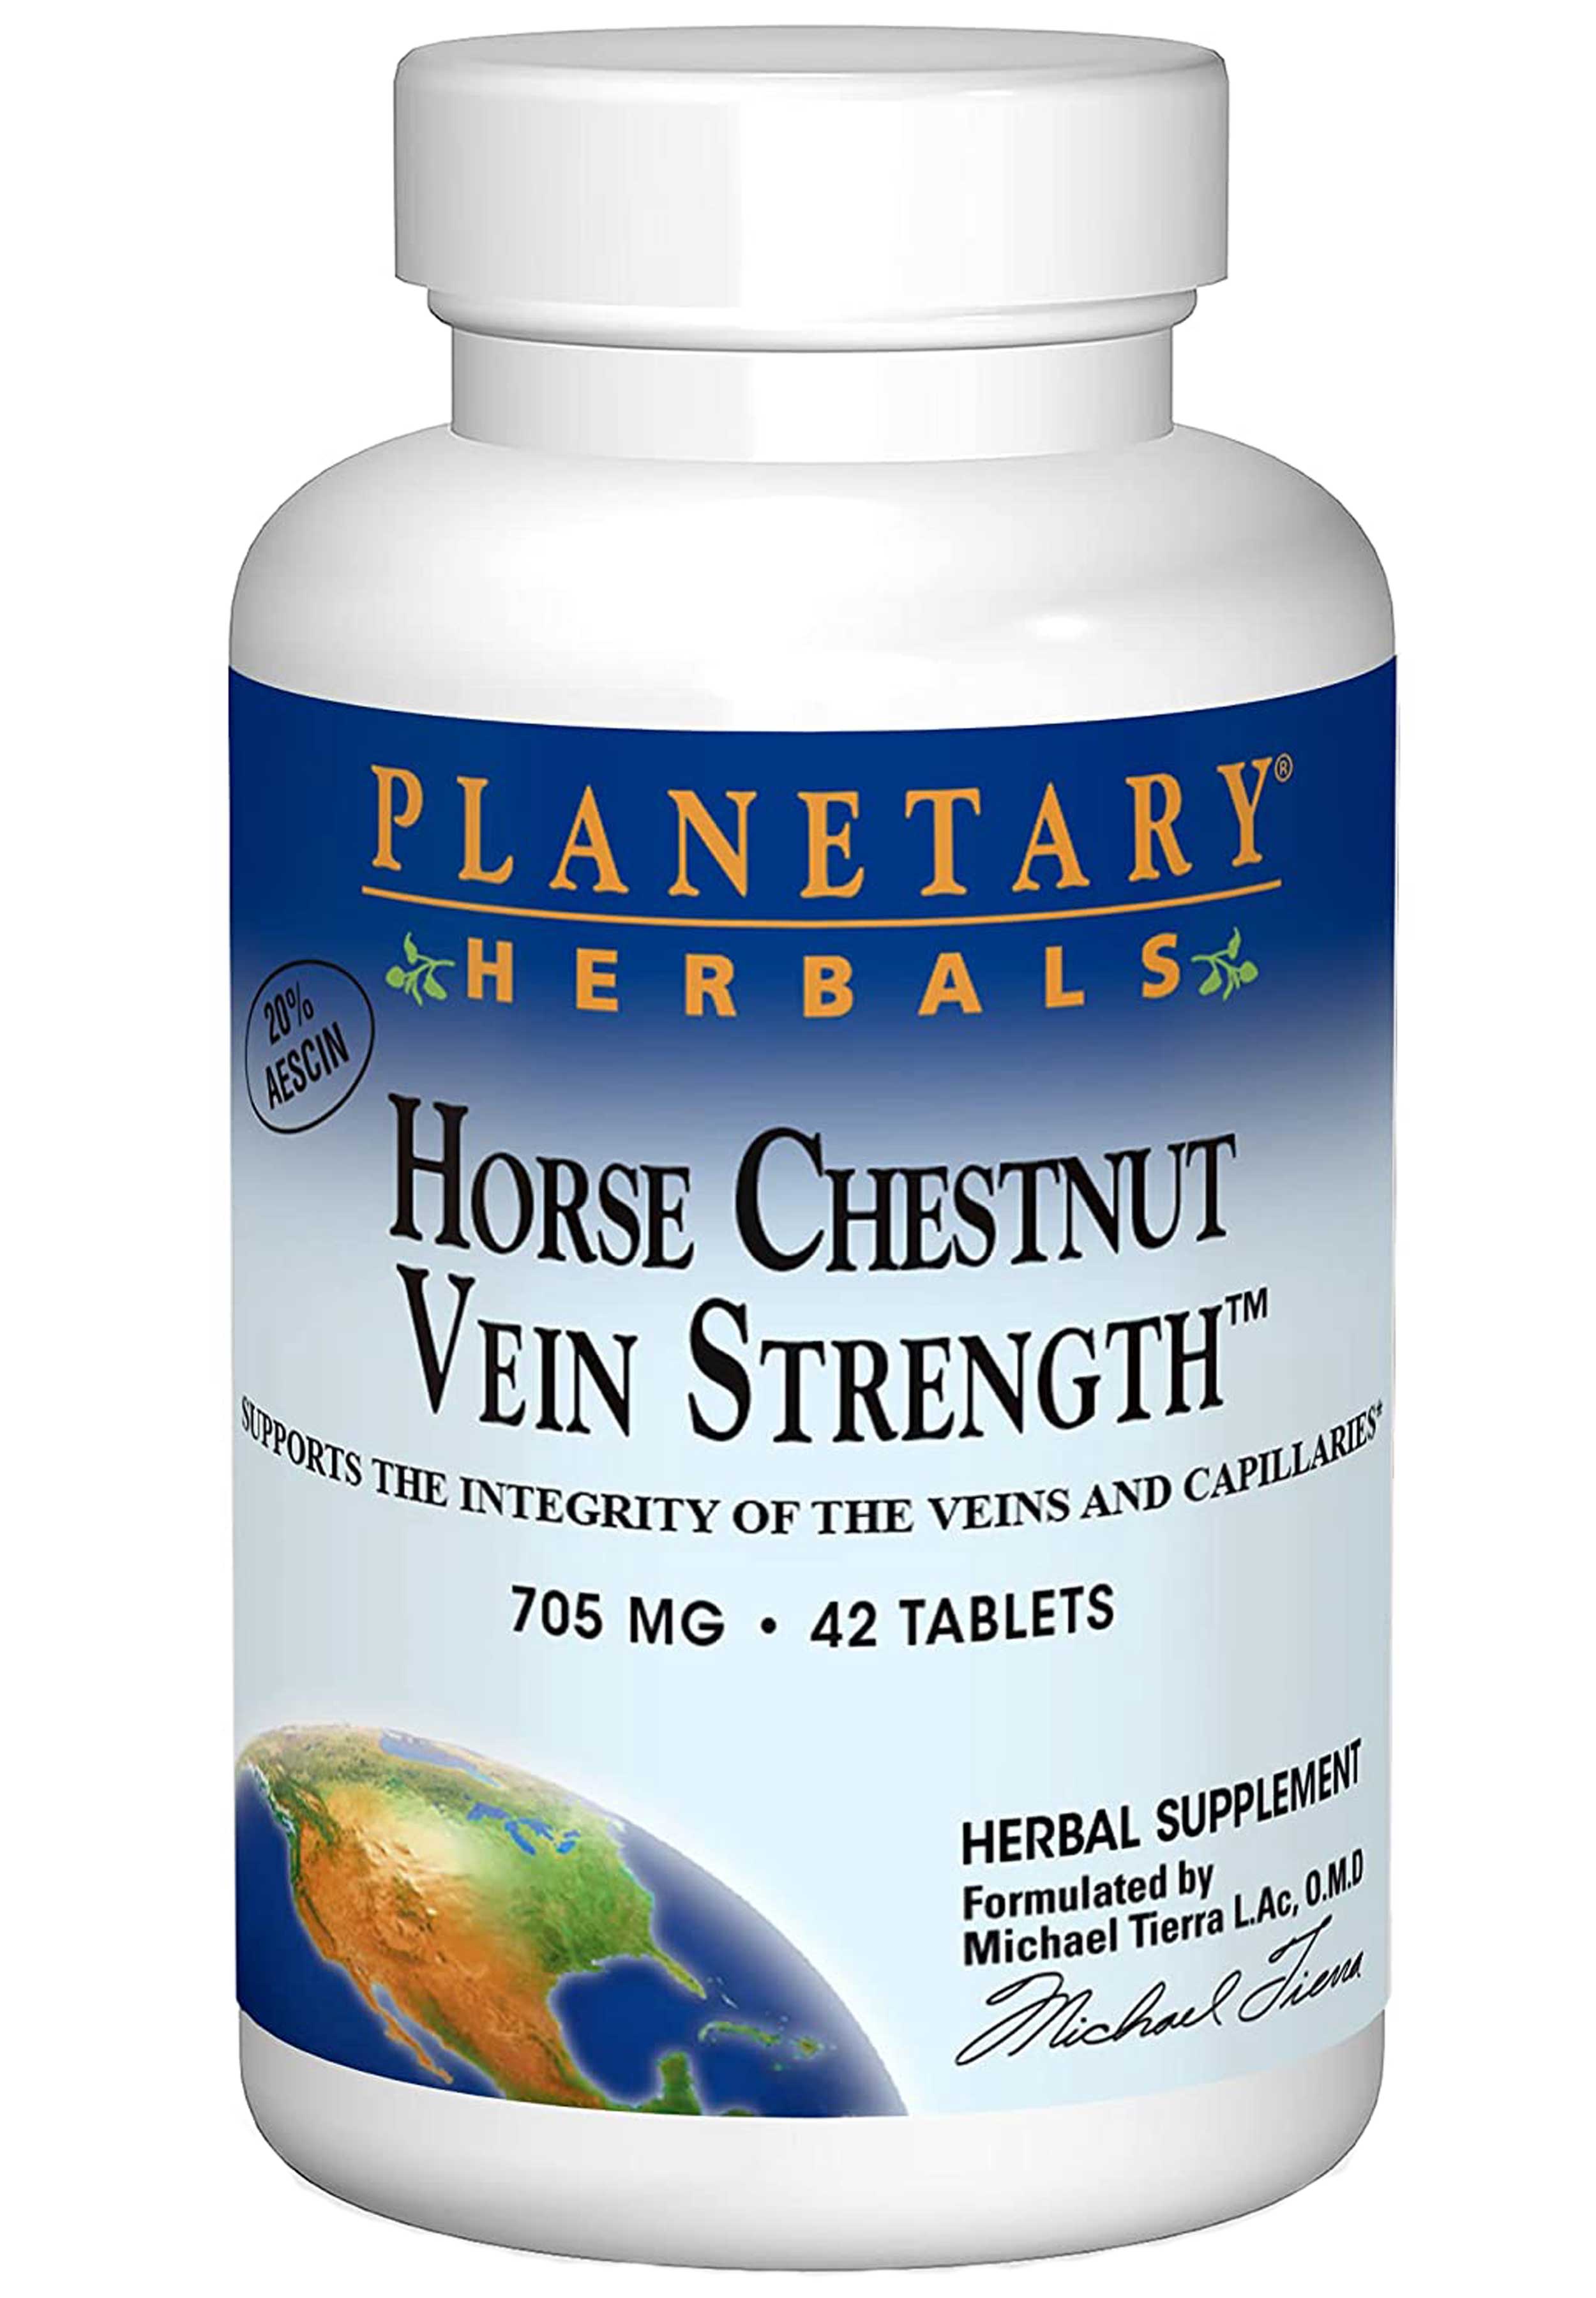 Planetary Herbals Horse Chestnut Vein Strength™